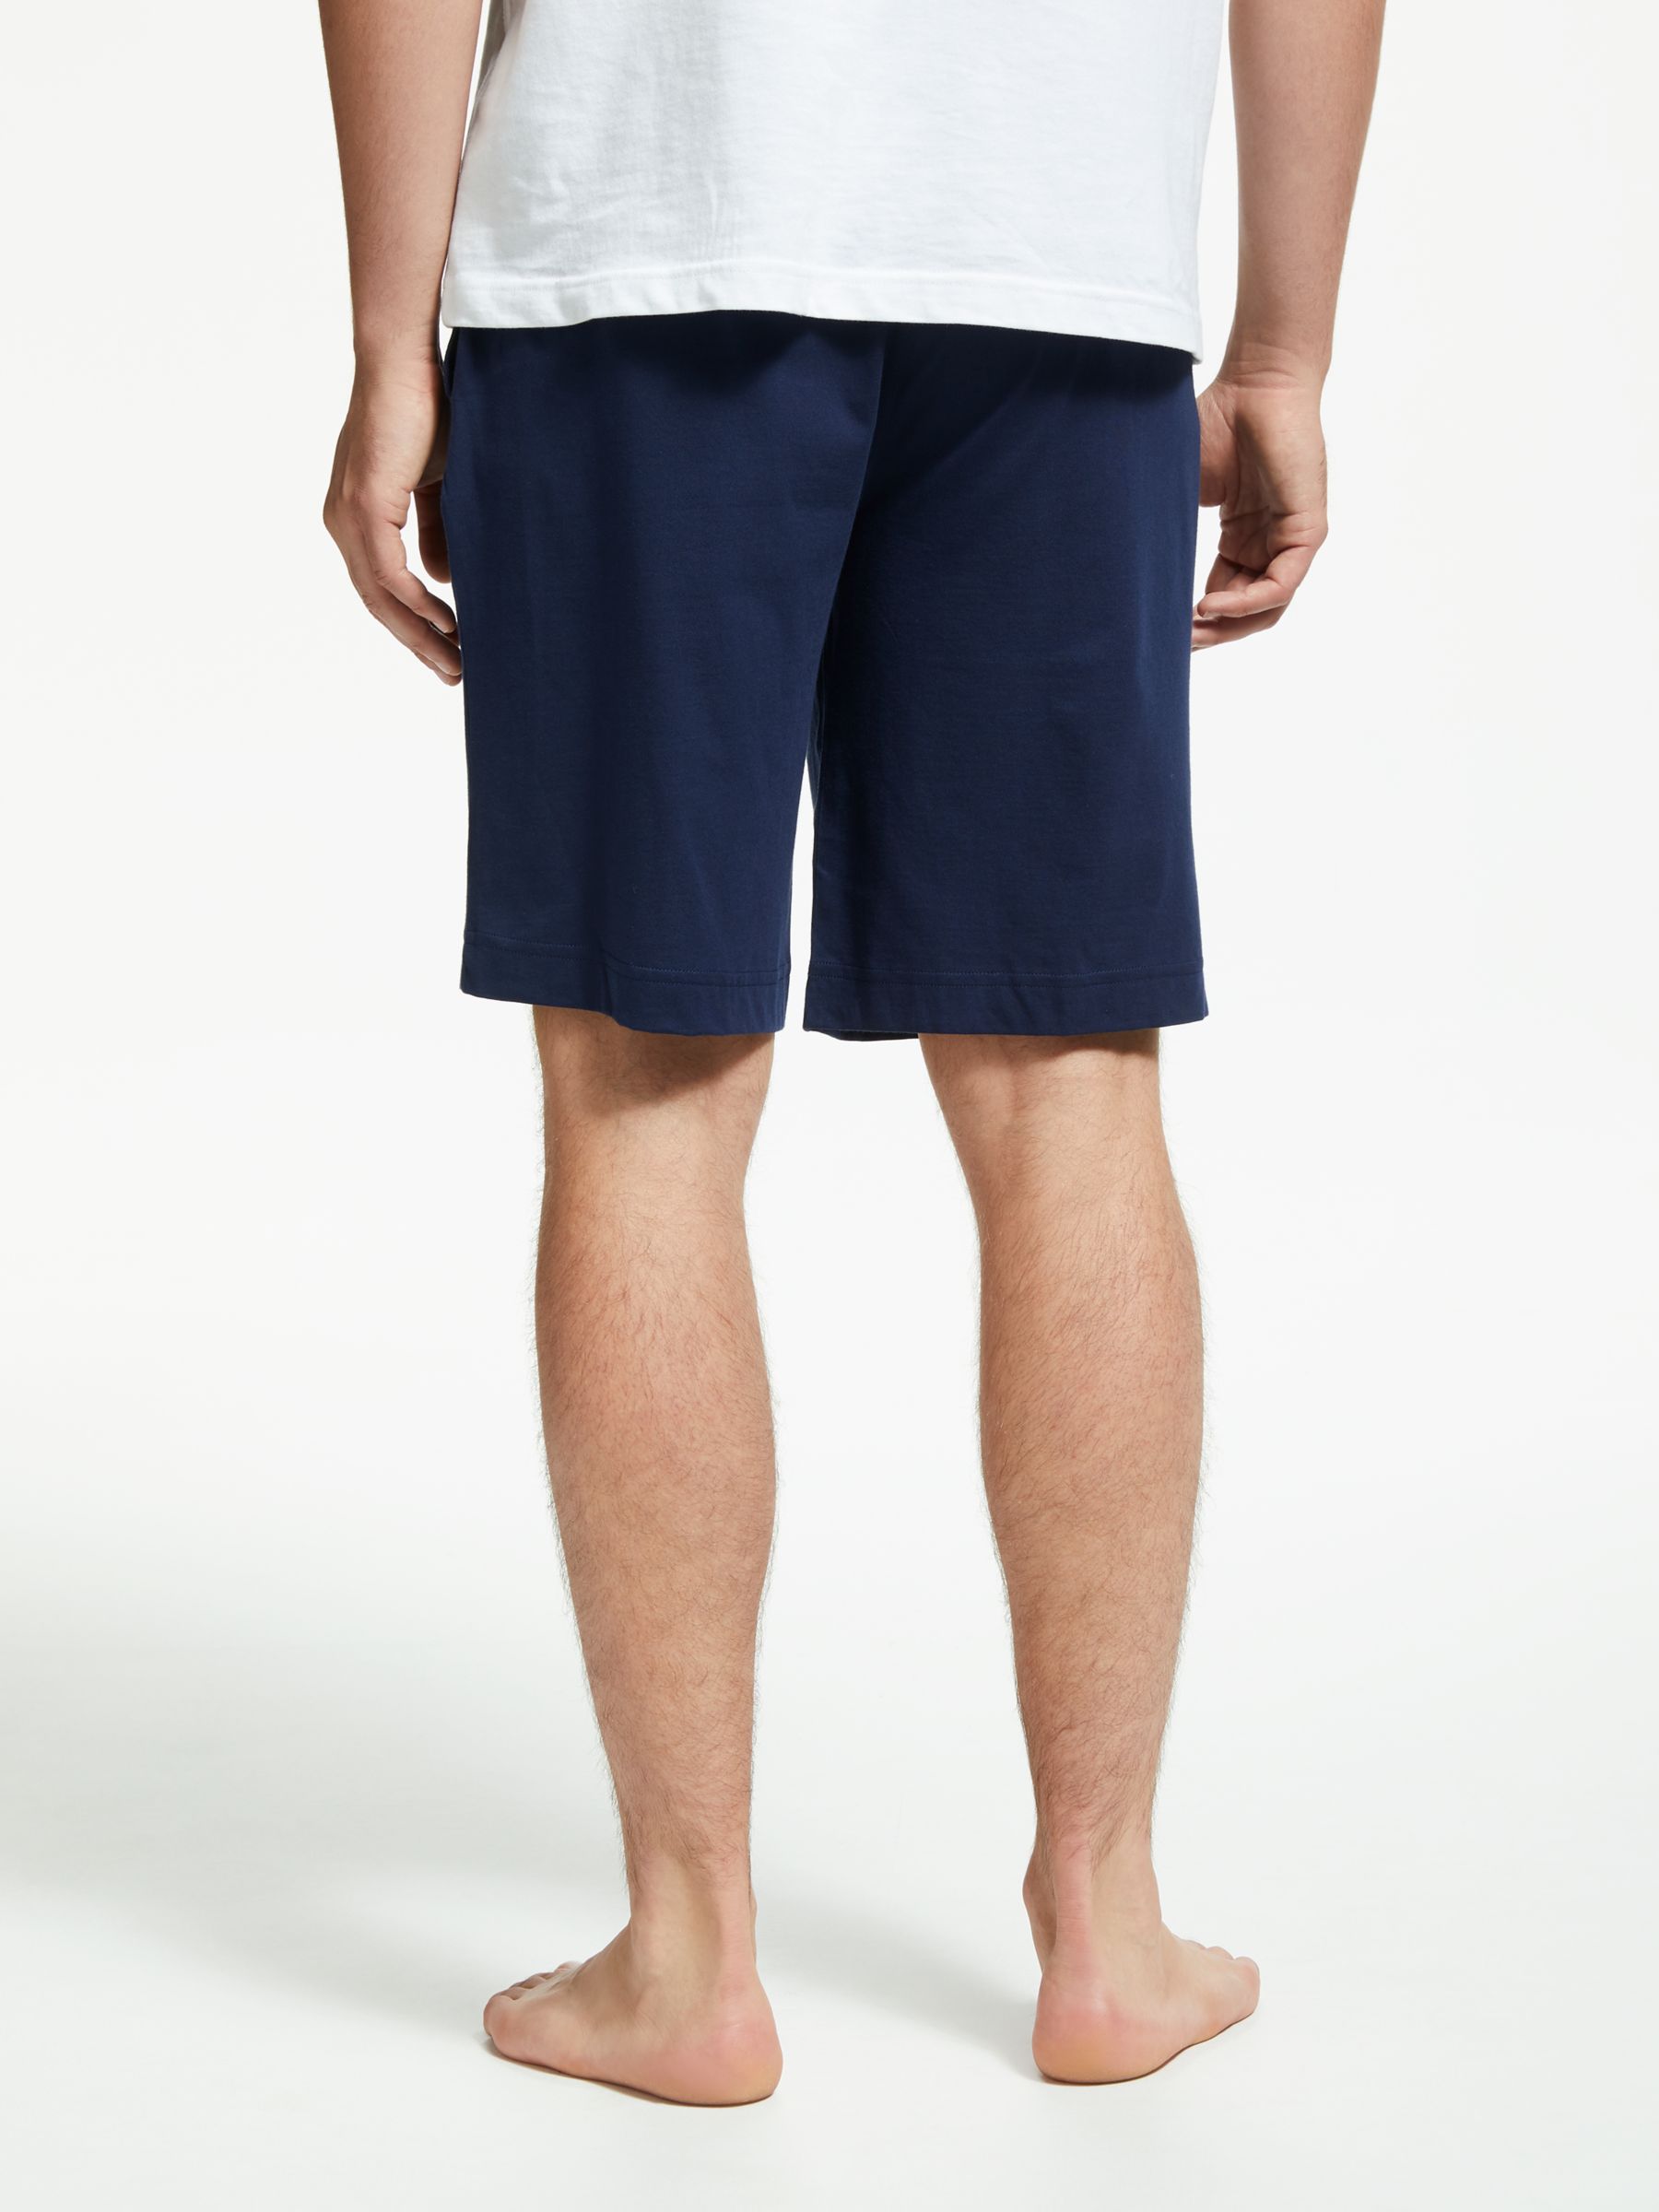 Polo Ralph Lauren Liquid Cotton Lounge Shorts, Navy, S